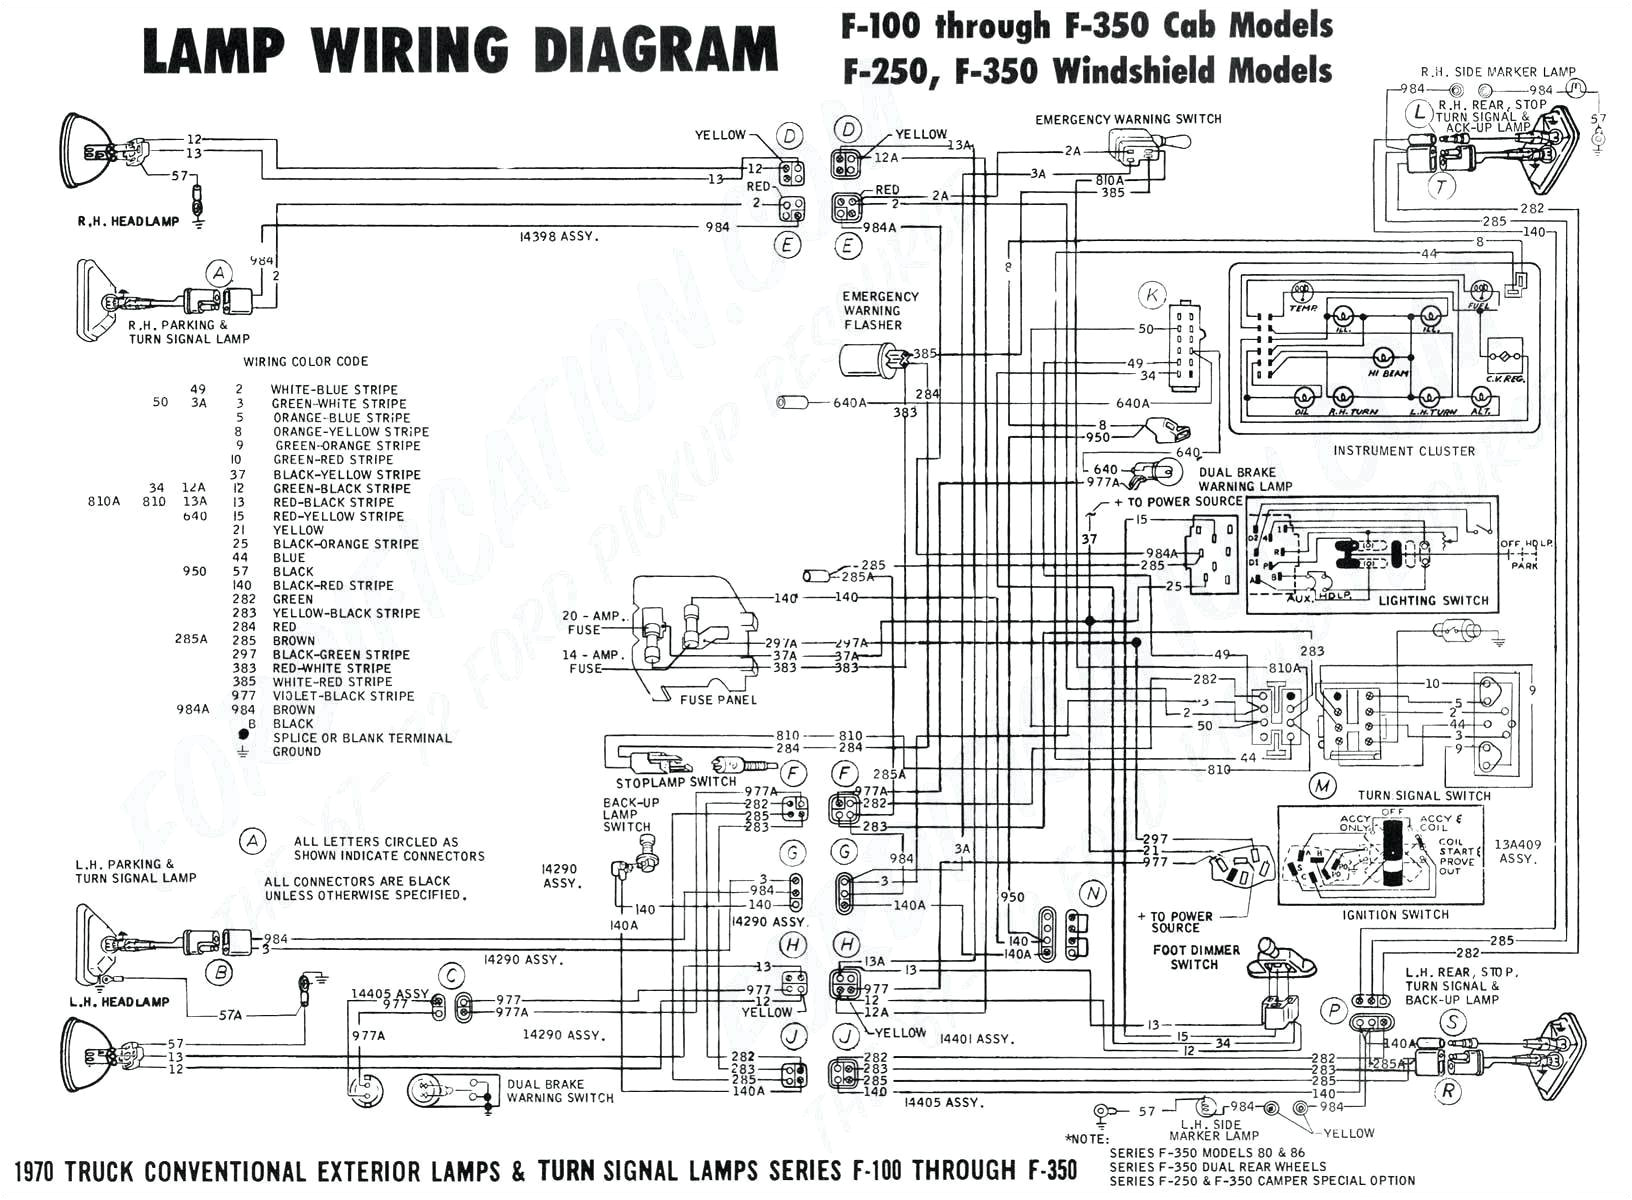 hazard flasher wiring diagram best of wiring diagram for hazard lights inspirational wiring diagram for